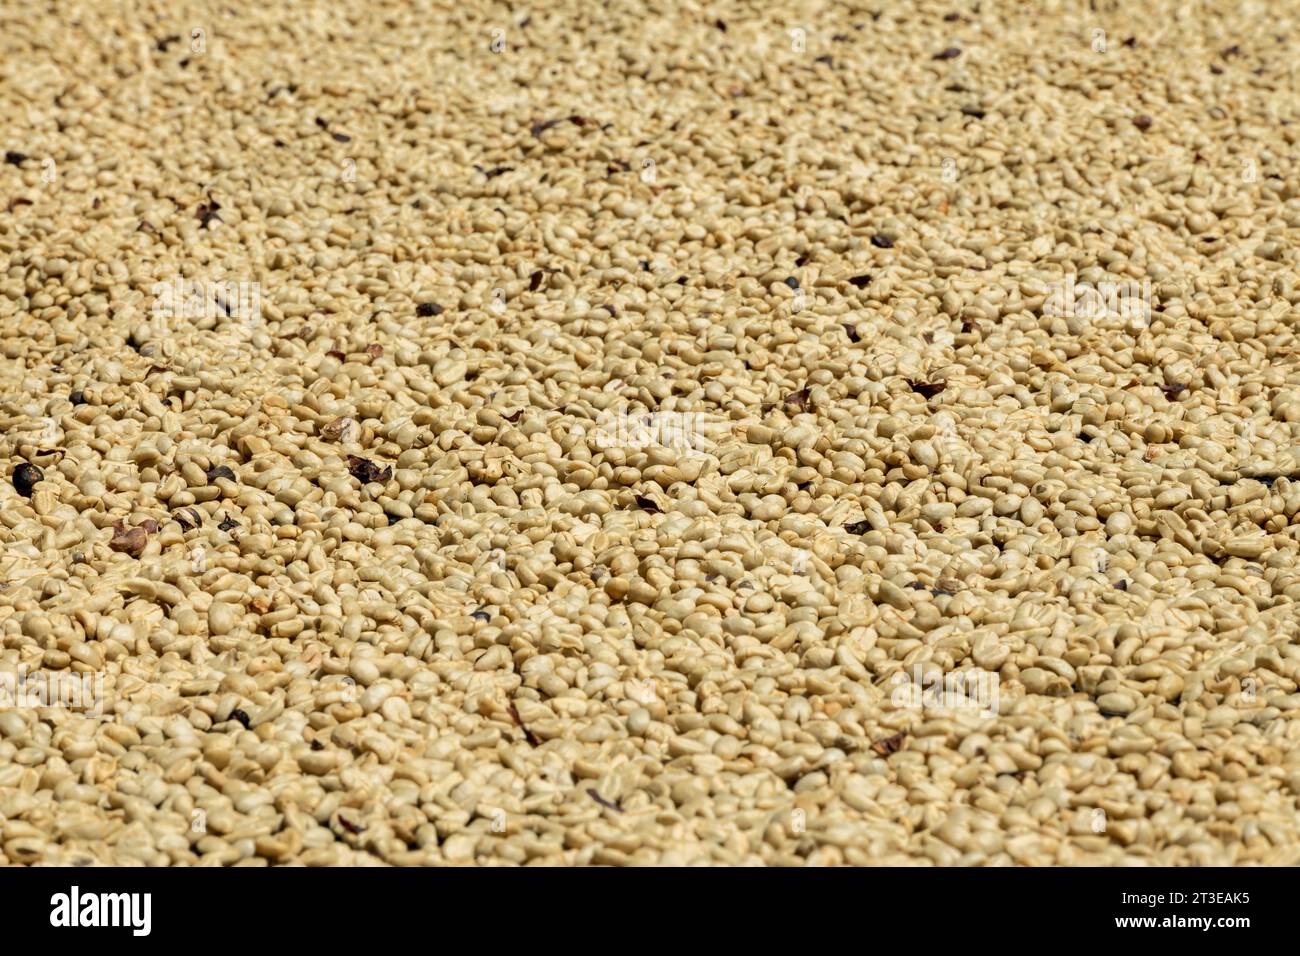 Cerca de granos de café arábica que se secan al sol. - foto de stock Foto de stock